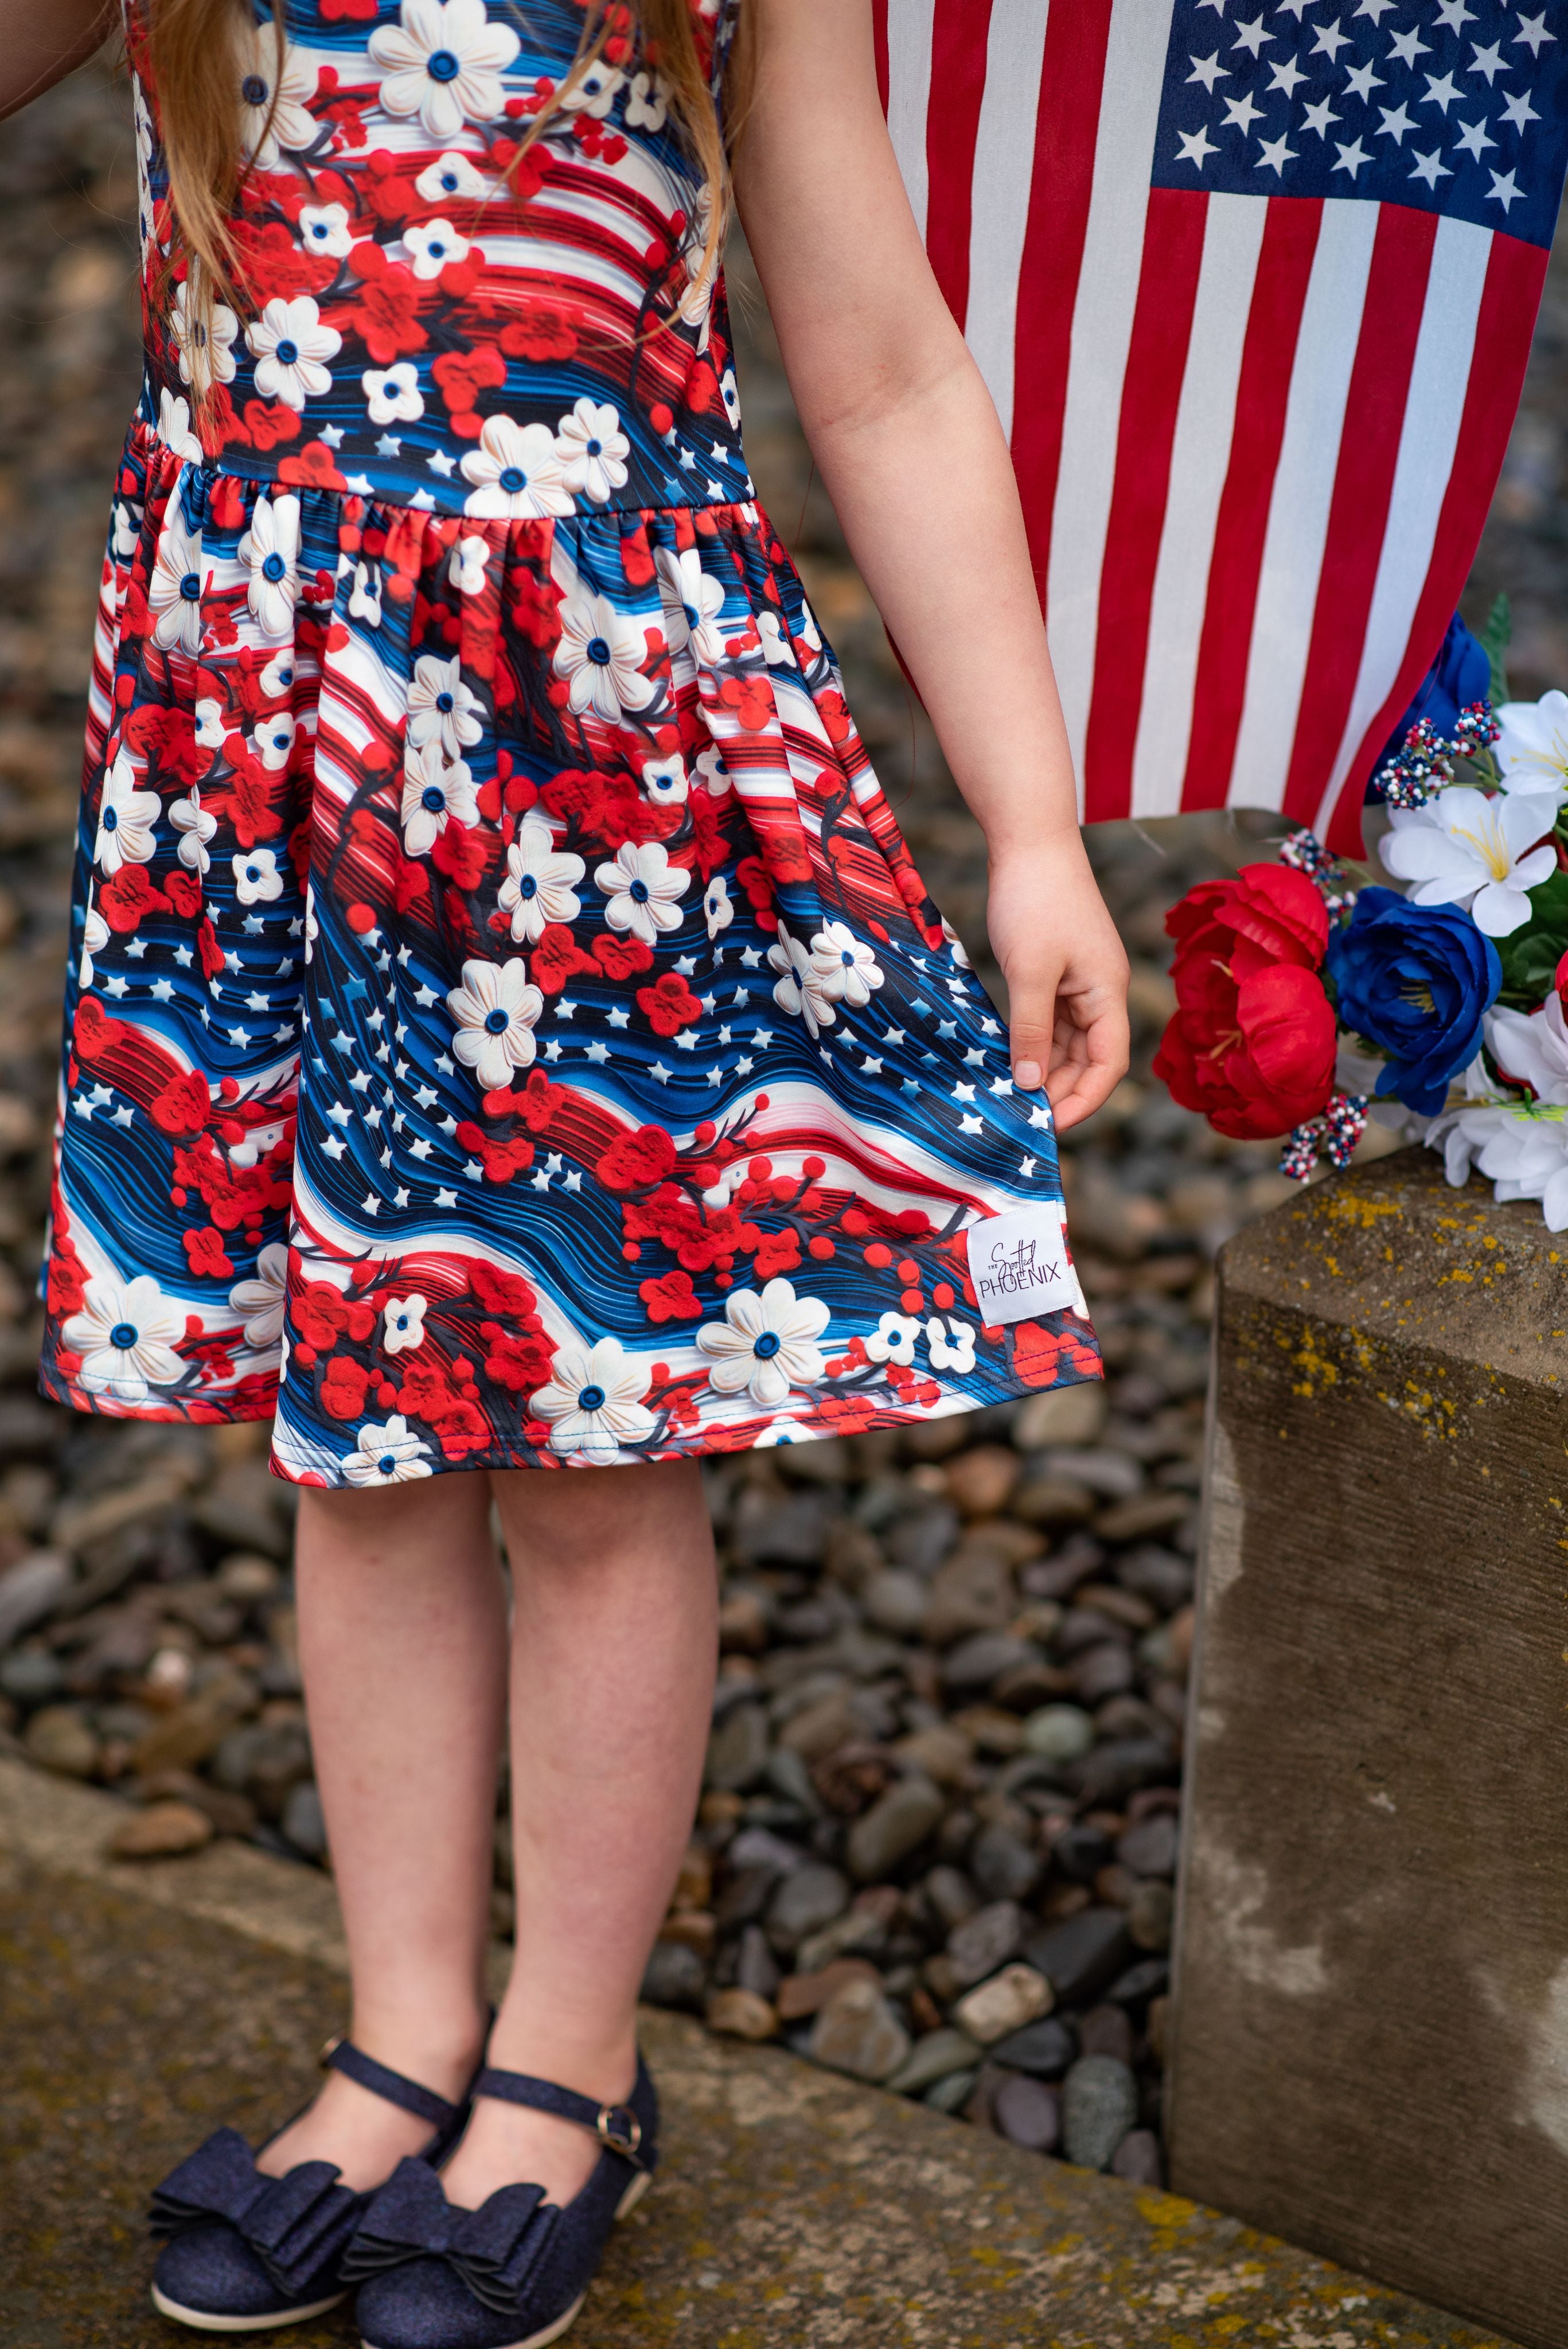 [America the Beautiful] Dress